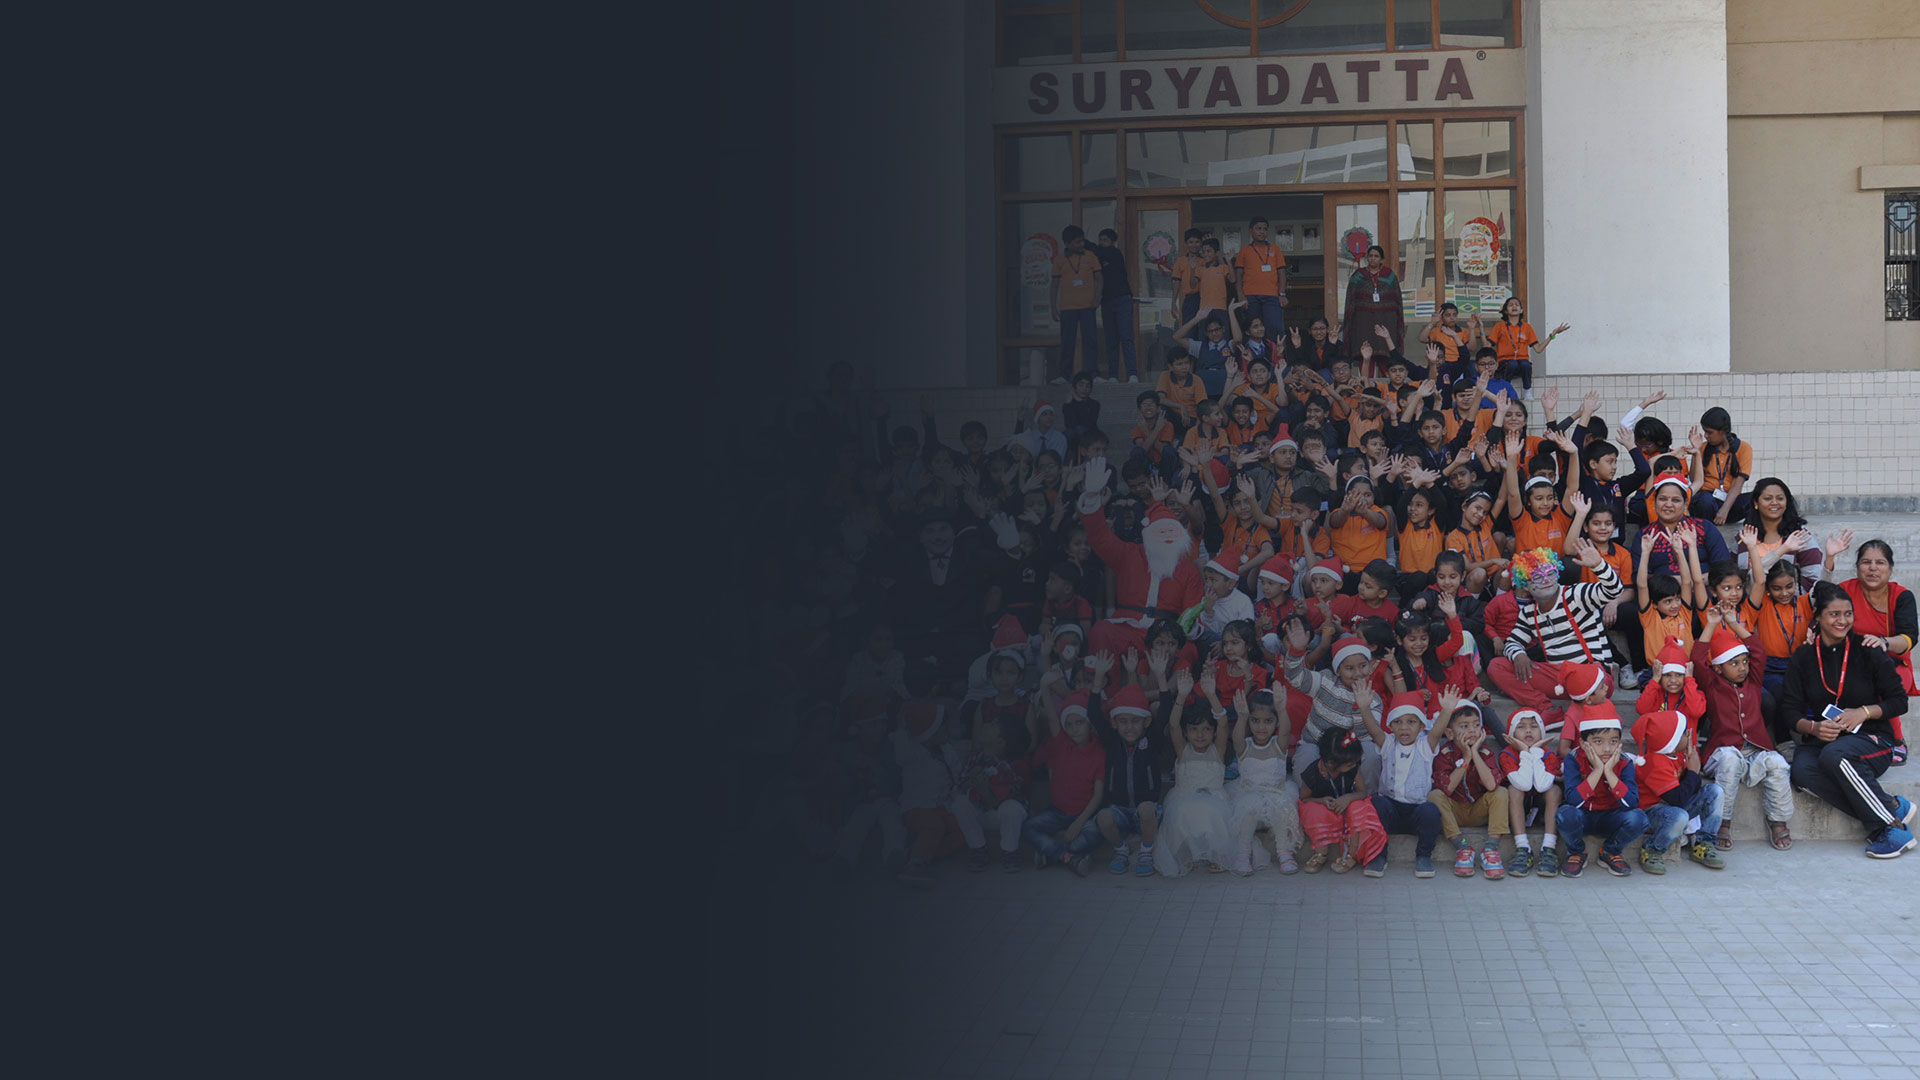 Student Activity - Suryadatta National School